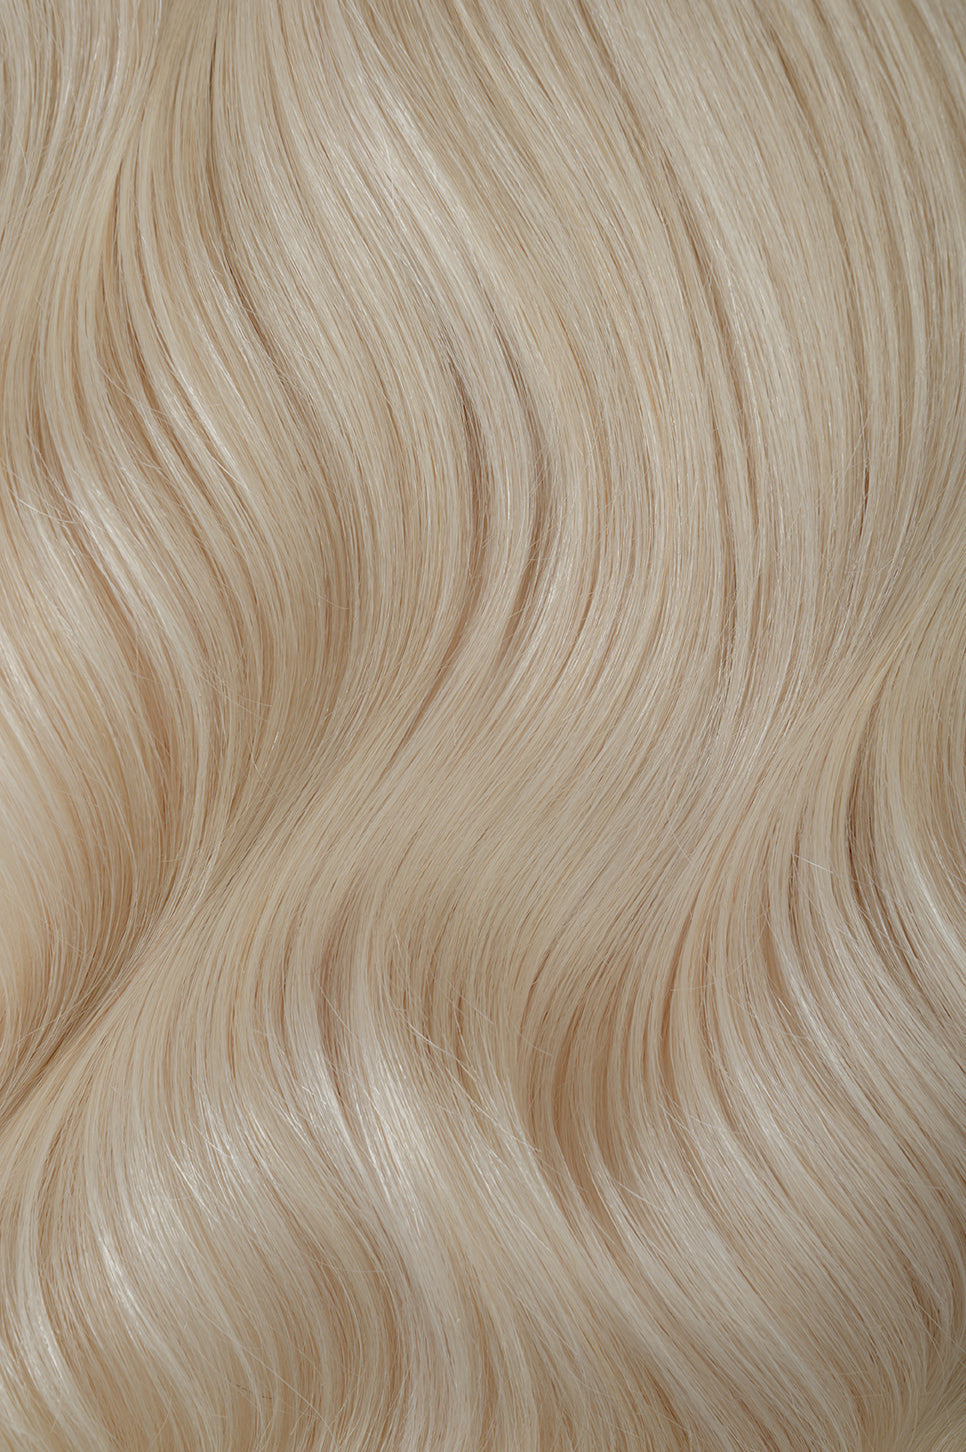 #60 Whitest Ash Blonde Ponytail Extensions